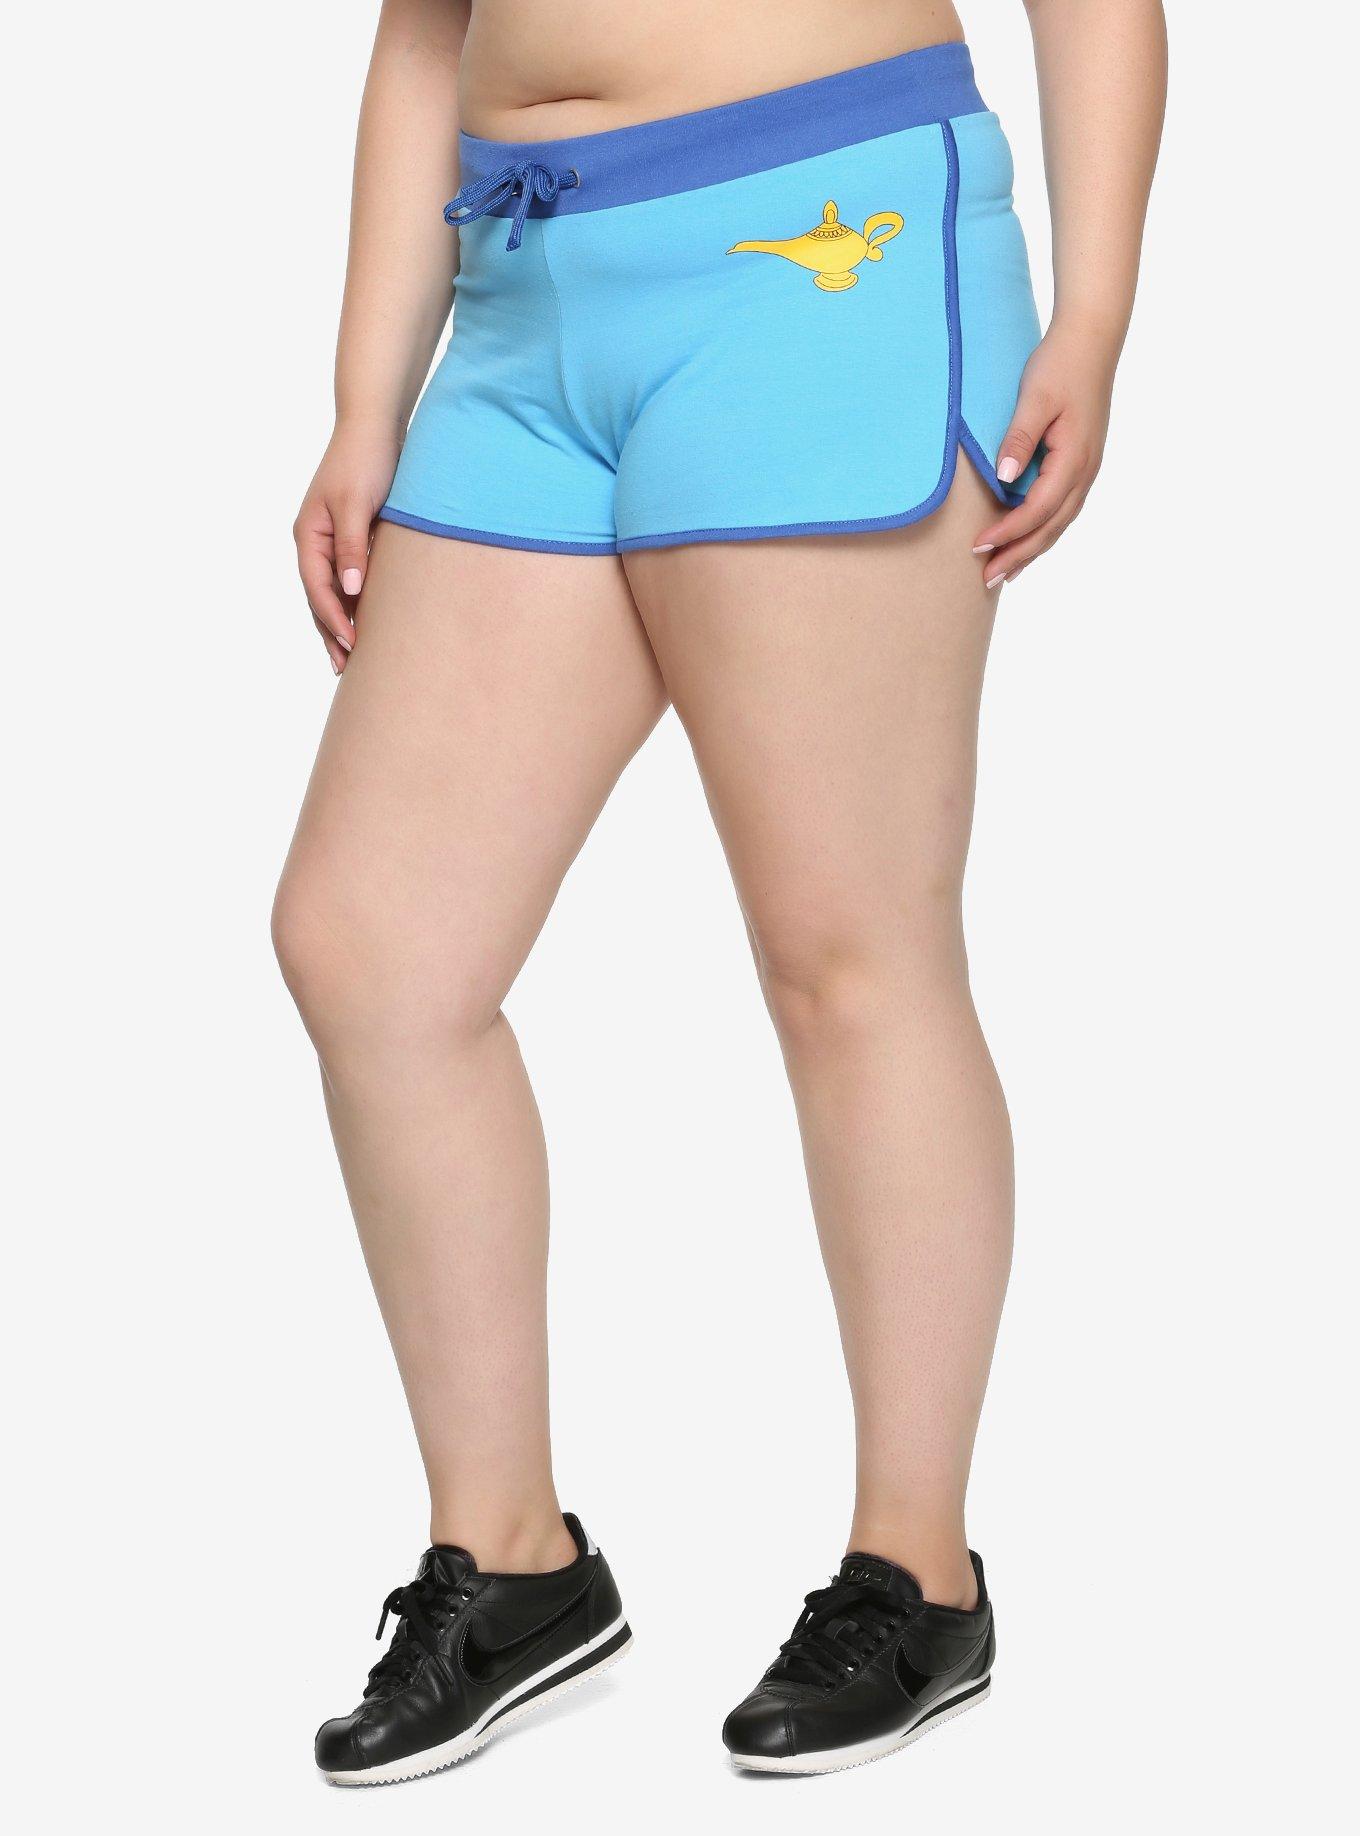 Disney Aladdin Genie Lamp Girls Soft Shorts Plus Size, BLUE, hi-res